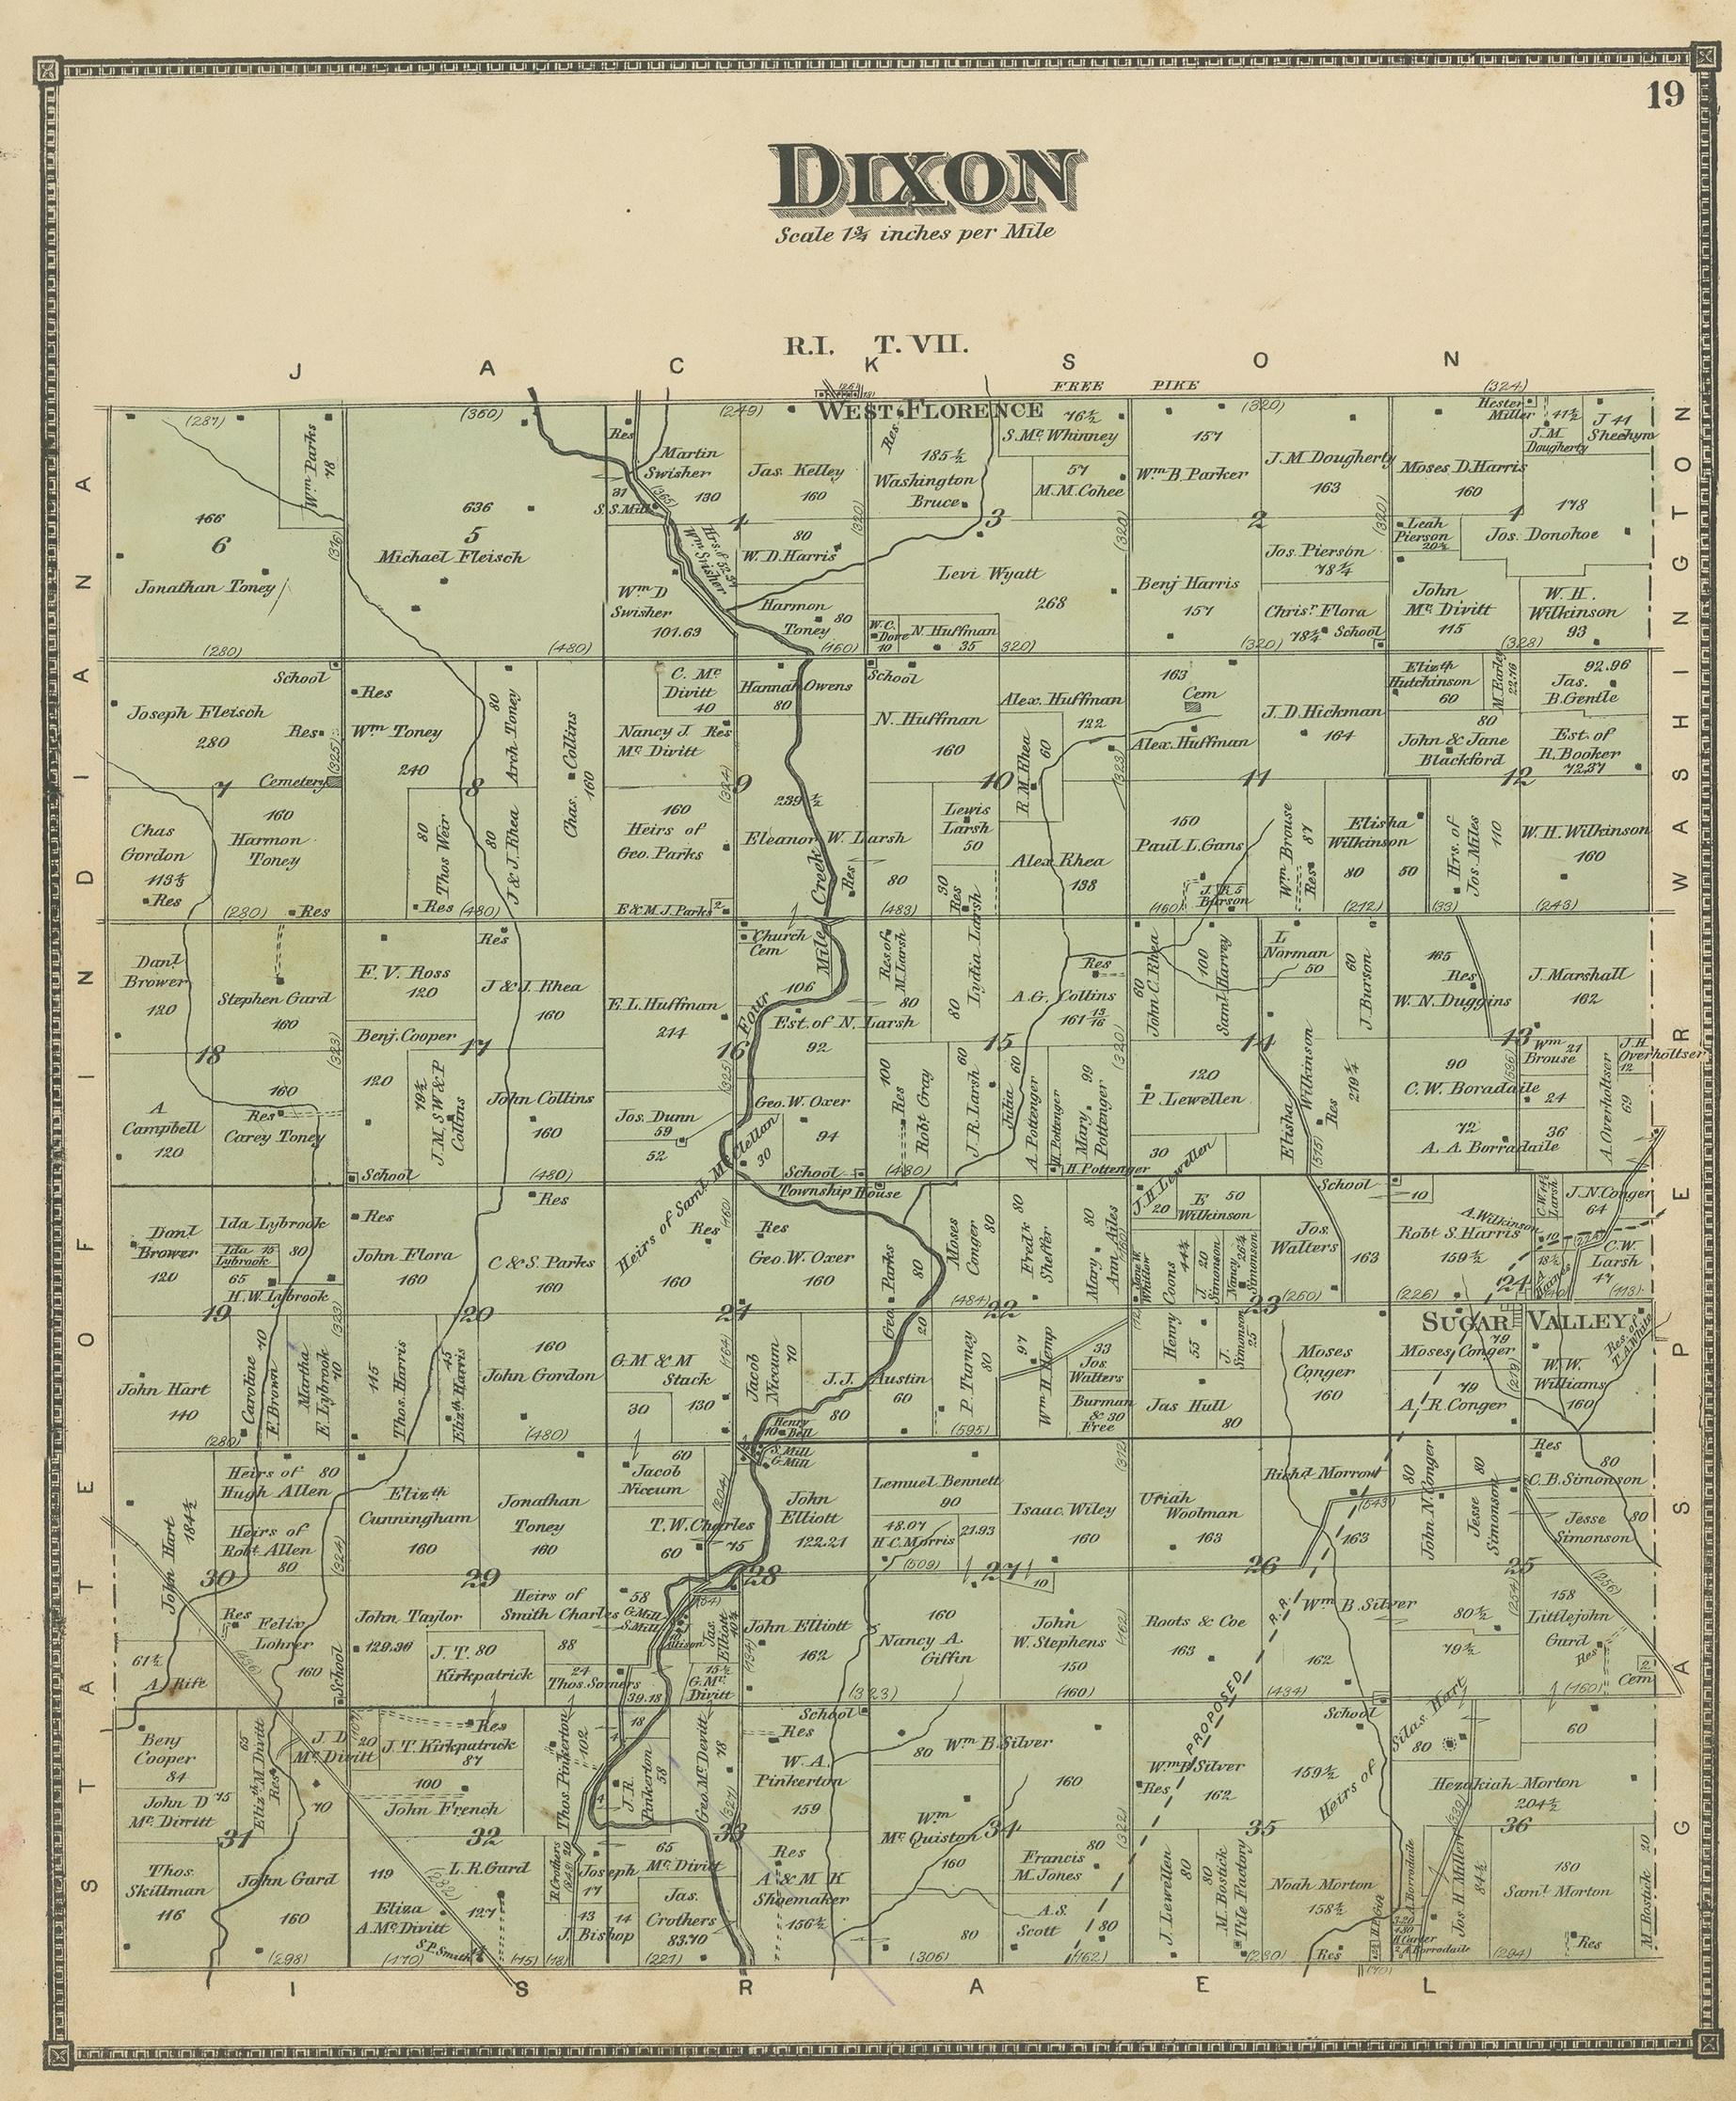 Antique map titled 'Dixon'. Original antique map of Dixon, Ohio. This map originates from 'Atlas of Preble County Ohio' by C.O. Titus. Published 1871.